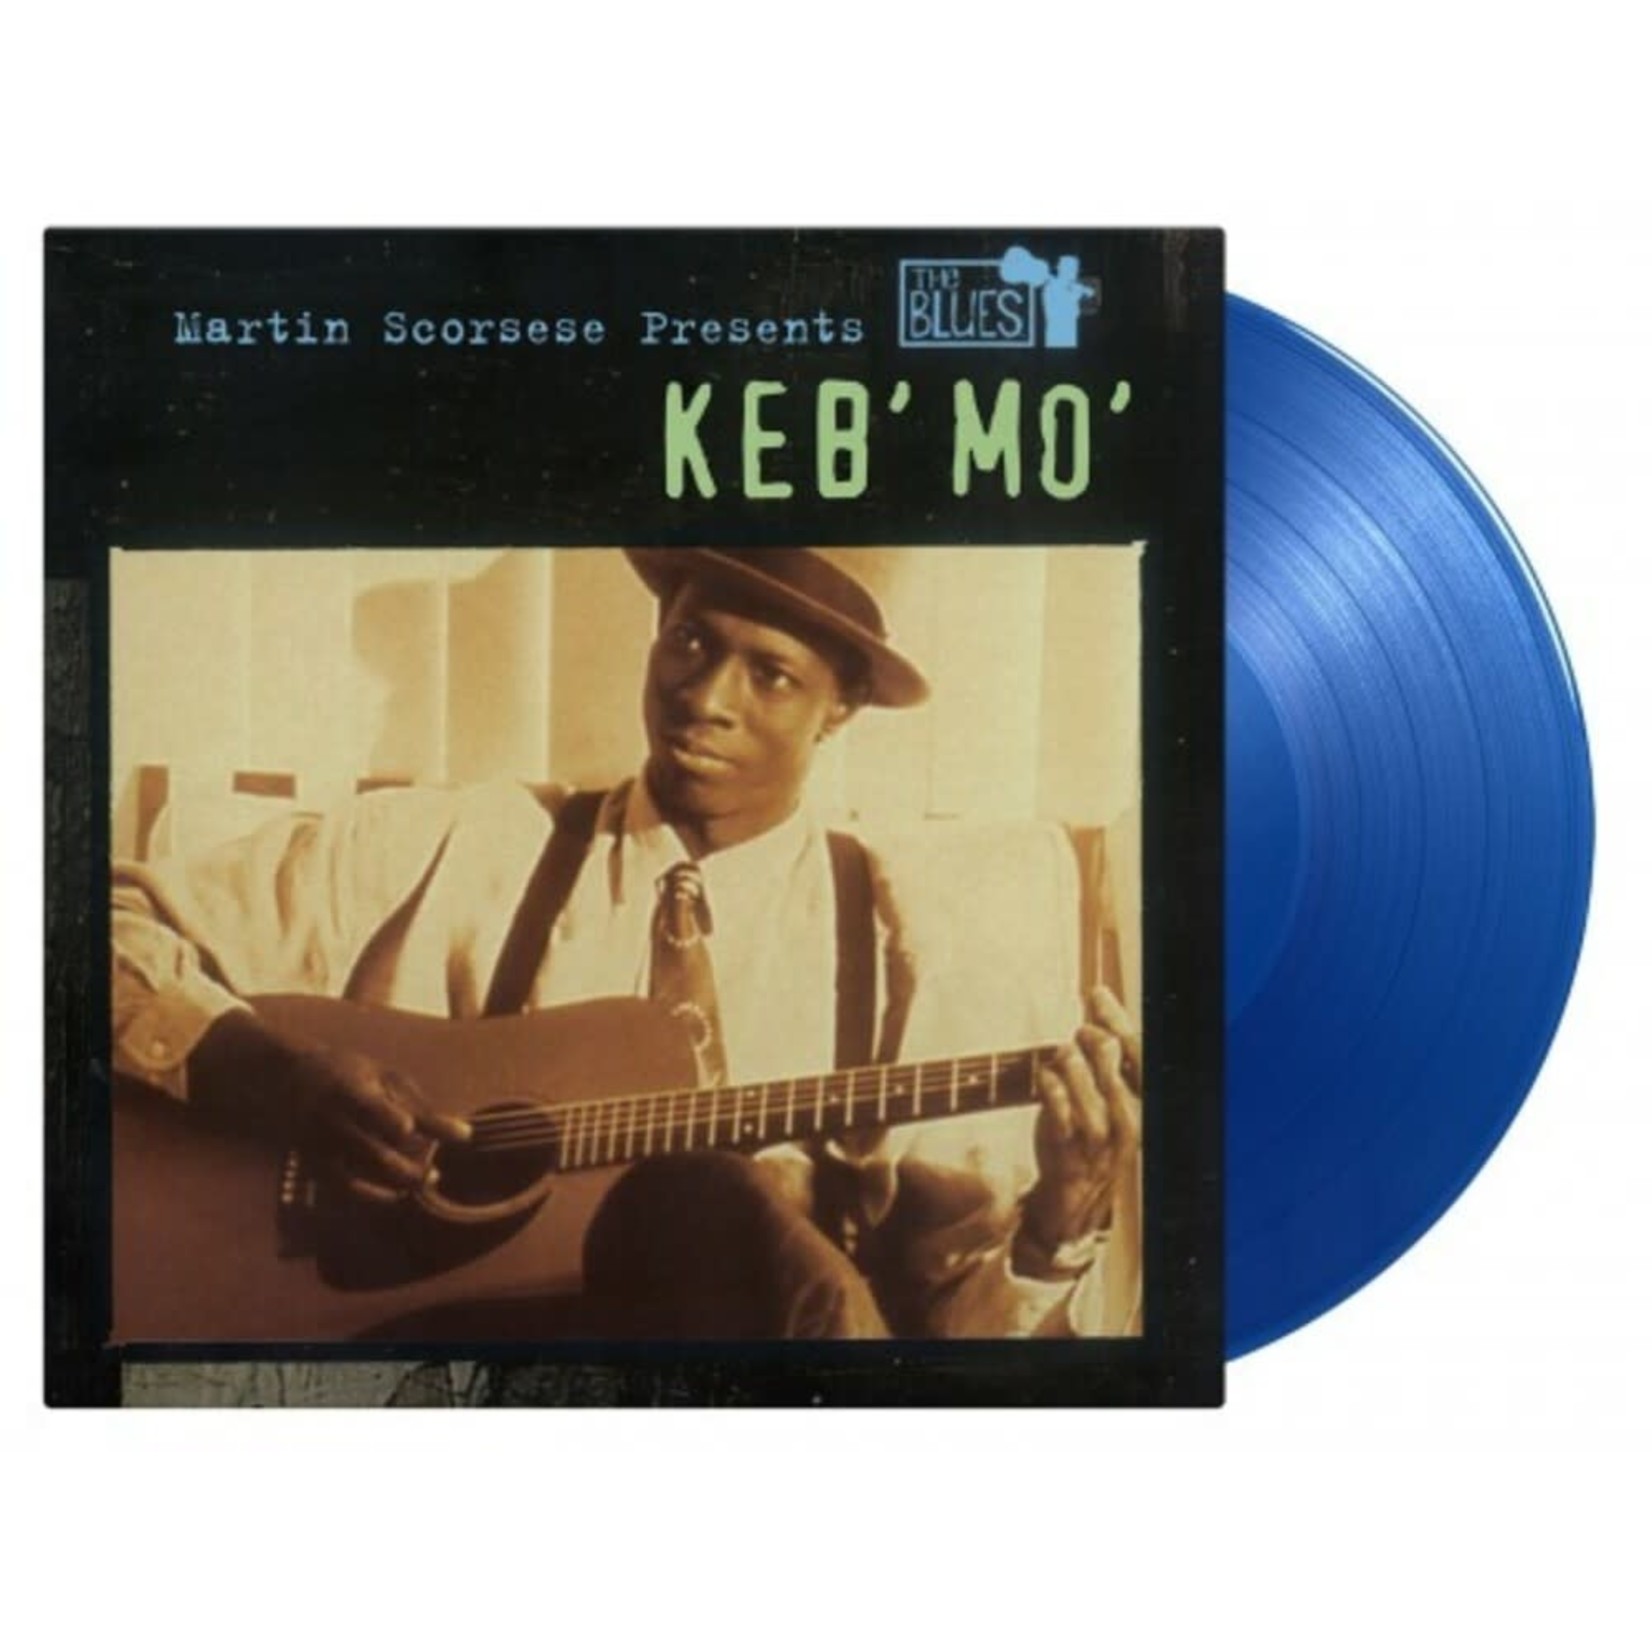 [New] Keb' Mo' - Martin Scorcese Presents The Blues (2LP, 180g, translucent blue vinyl)